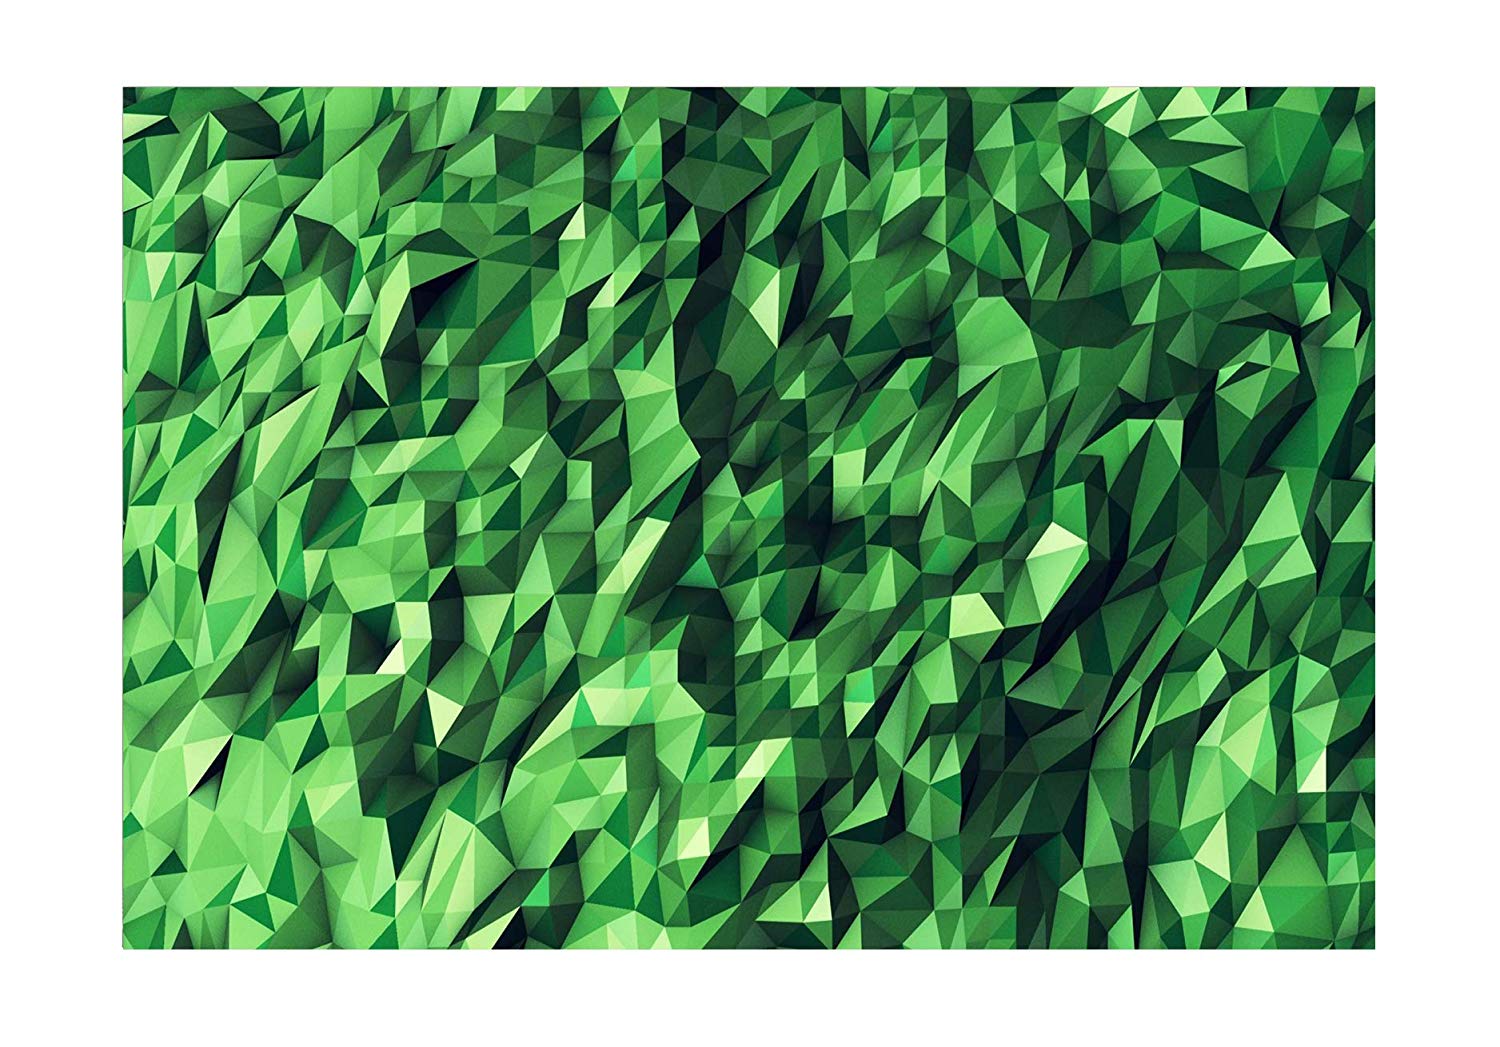 Solid Green Triangle Logo - Amazon.com : JANNINSE Abstract Solid Green Triangle Cuboid Geometric